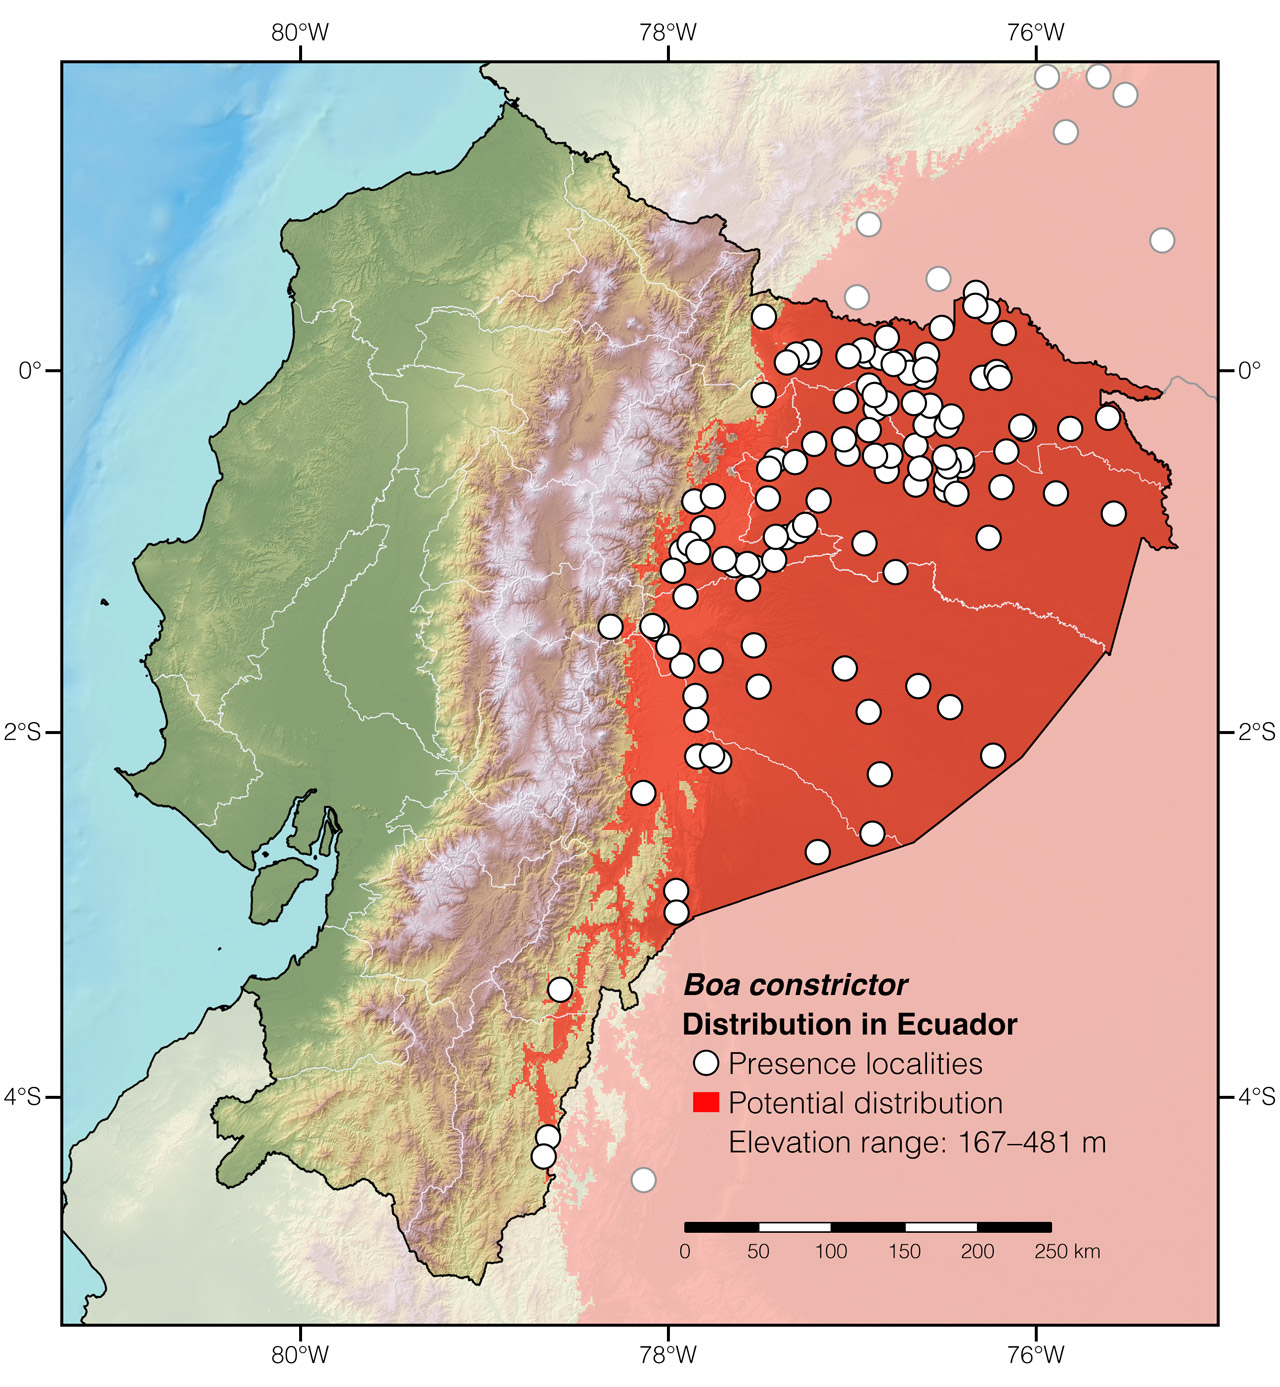 Distribution of Boa constrictor in Ecuador